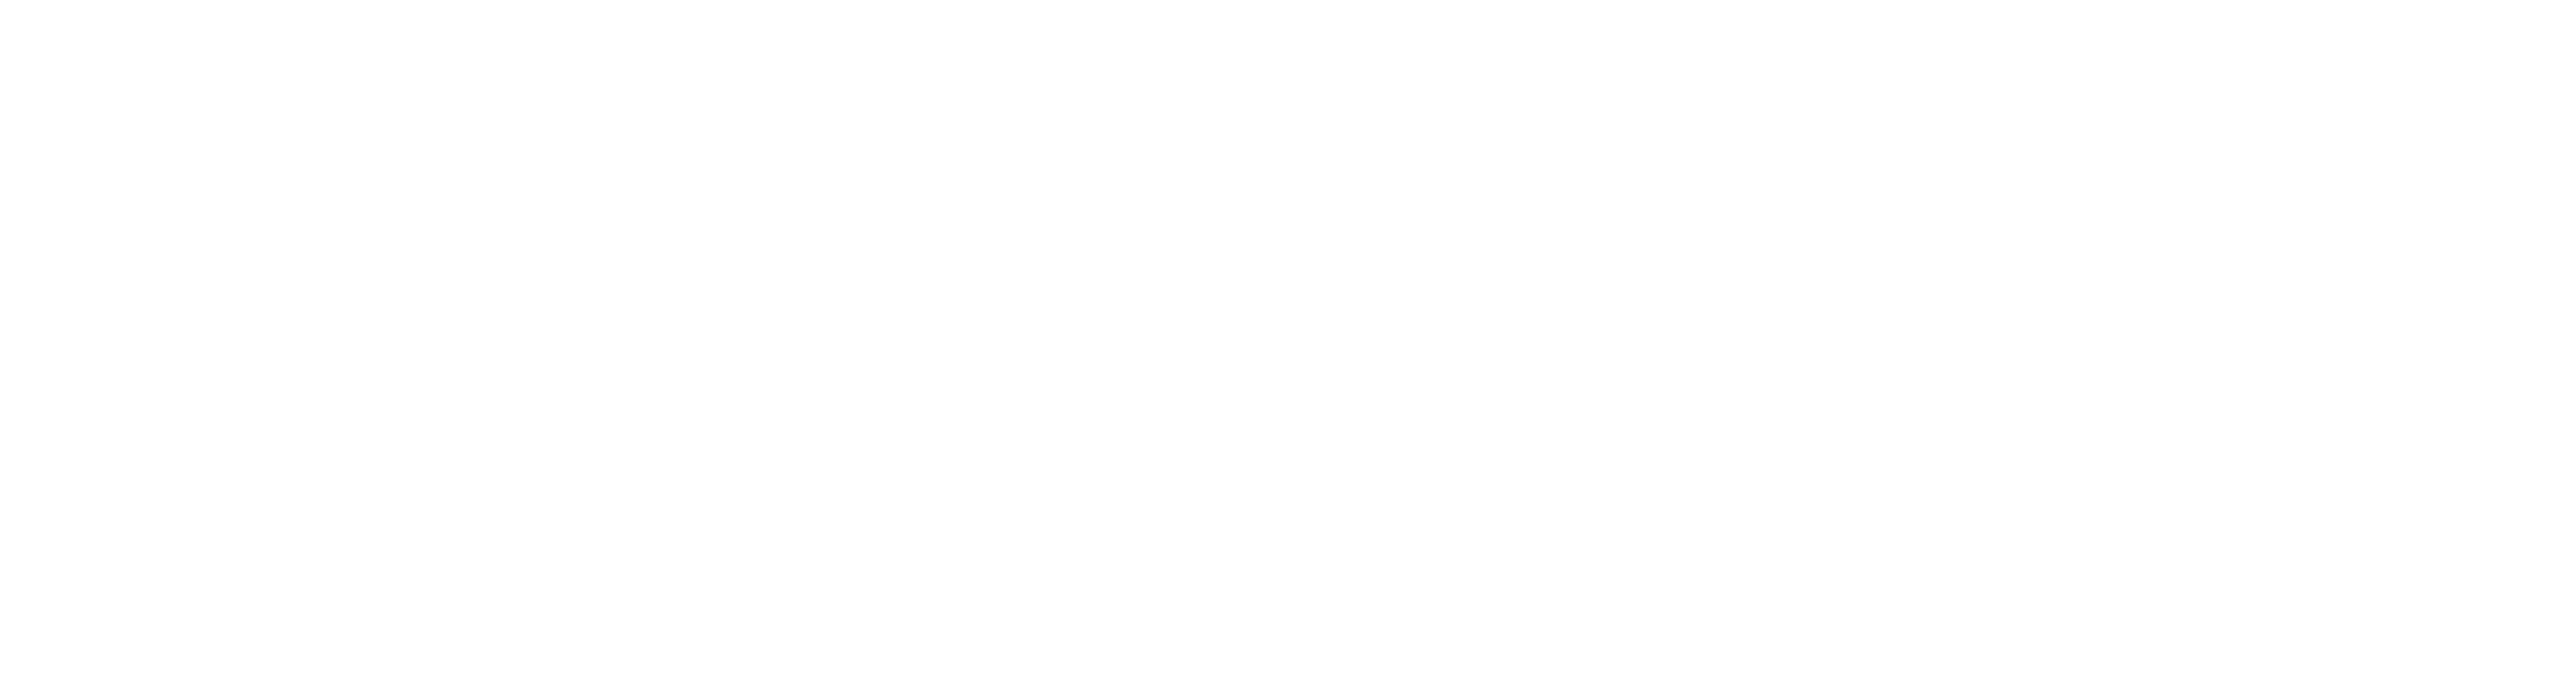 Downtown Plant Club